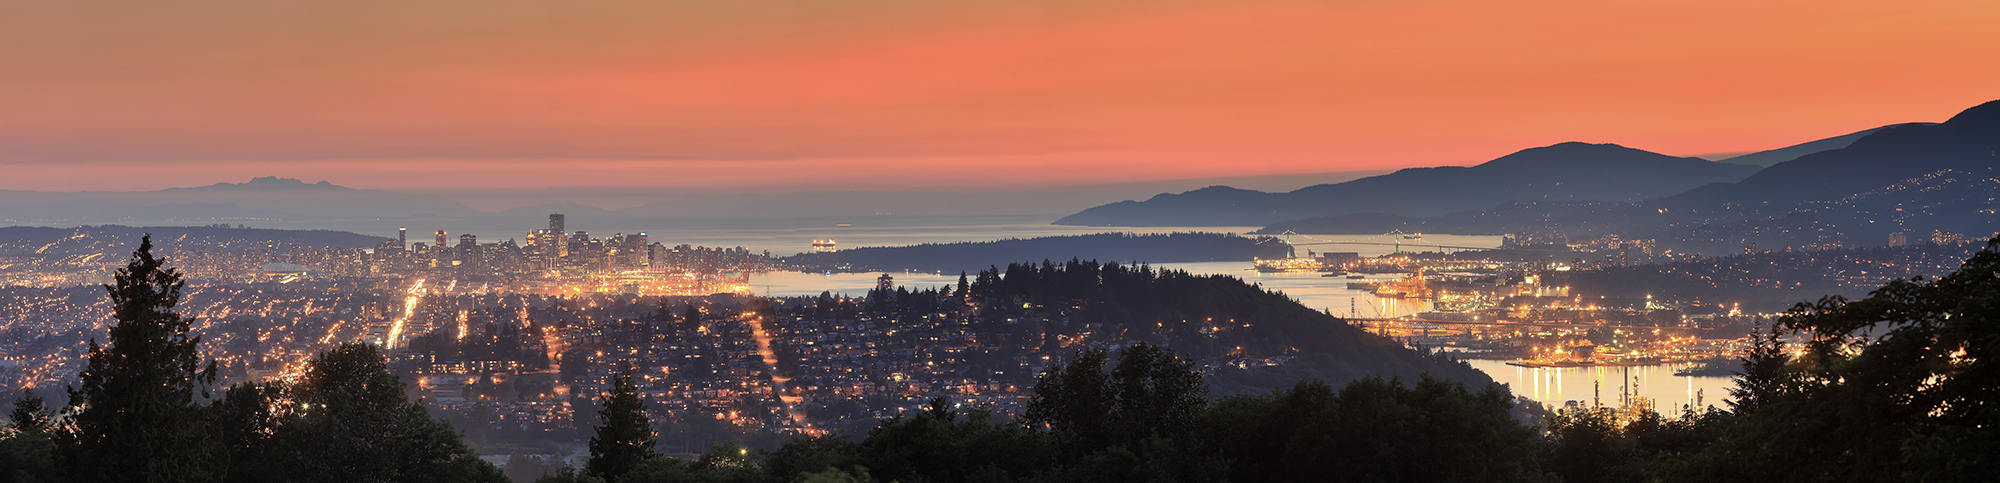 High-Resolution-Panoramic-Image-Vancouver-Skyline-SFU-Mountain-Sunset-Westcoast-BC-Canada